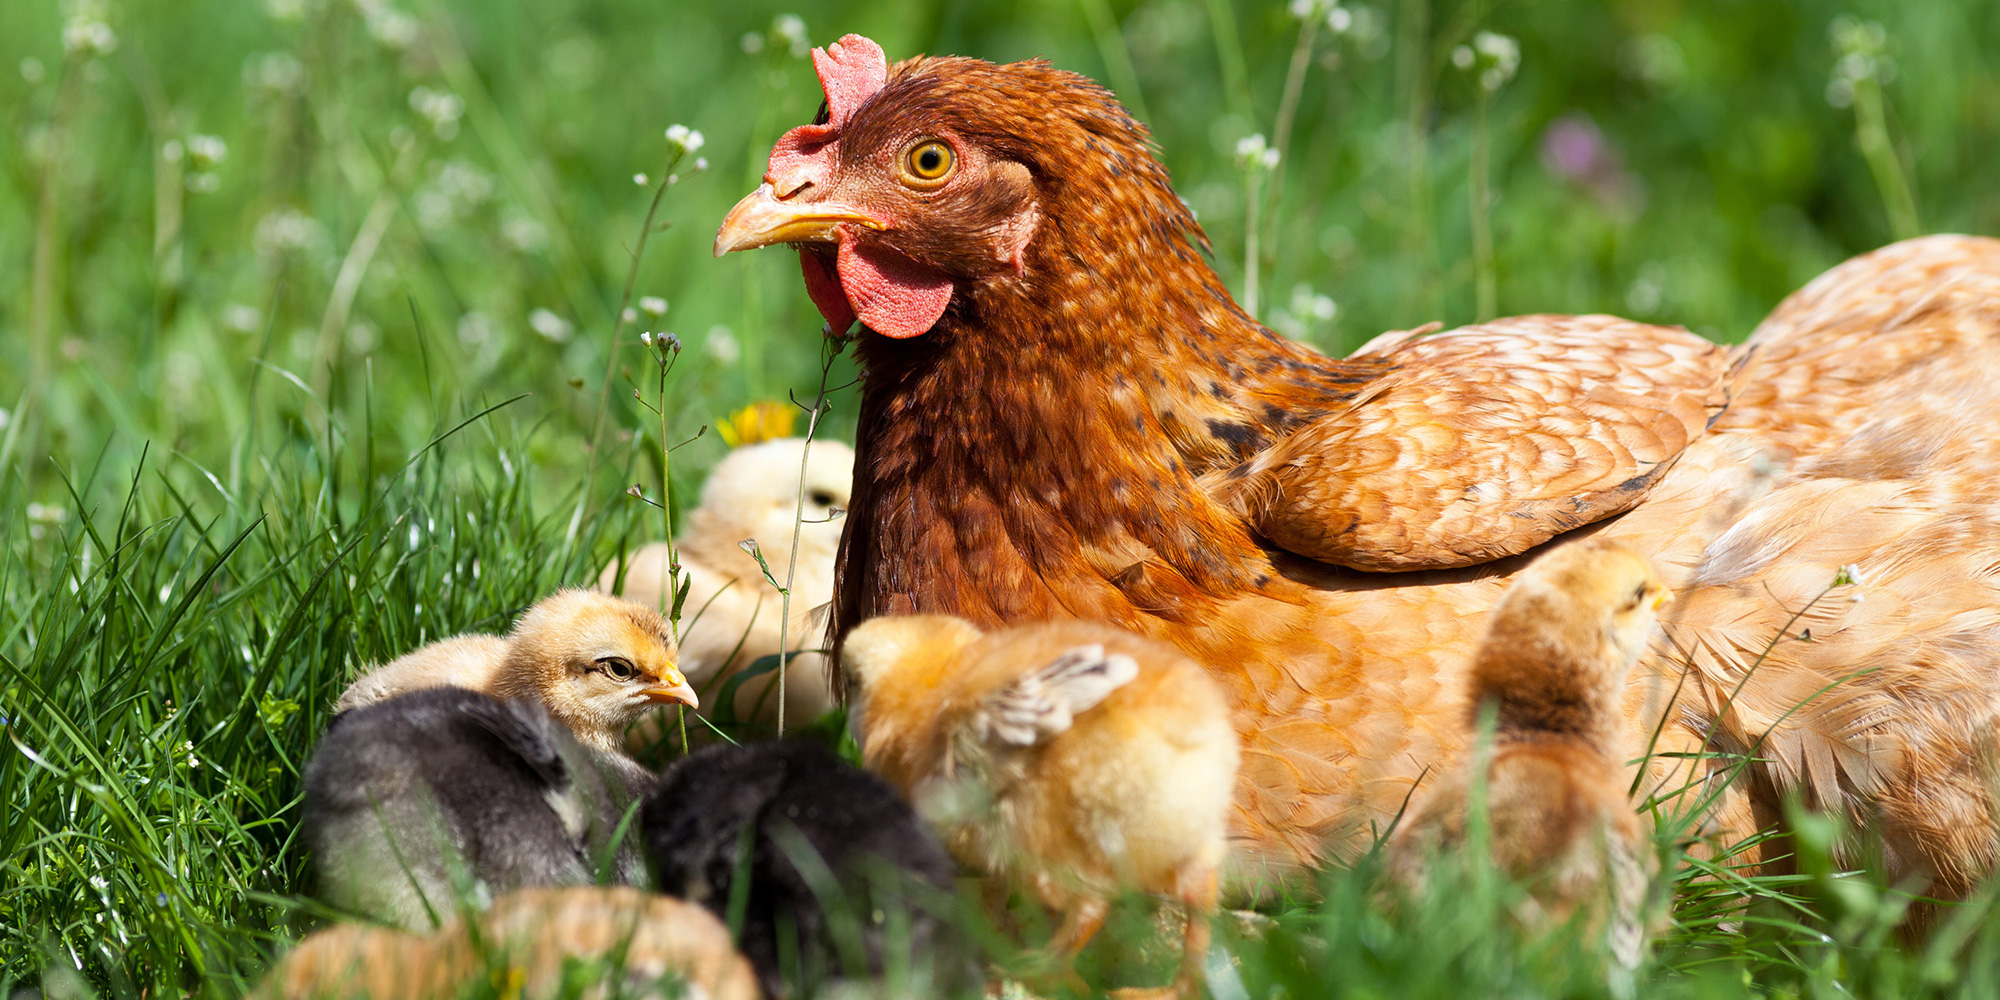 A hen sits in green grass. All around her are chicks walking around.